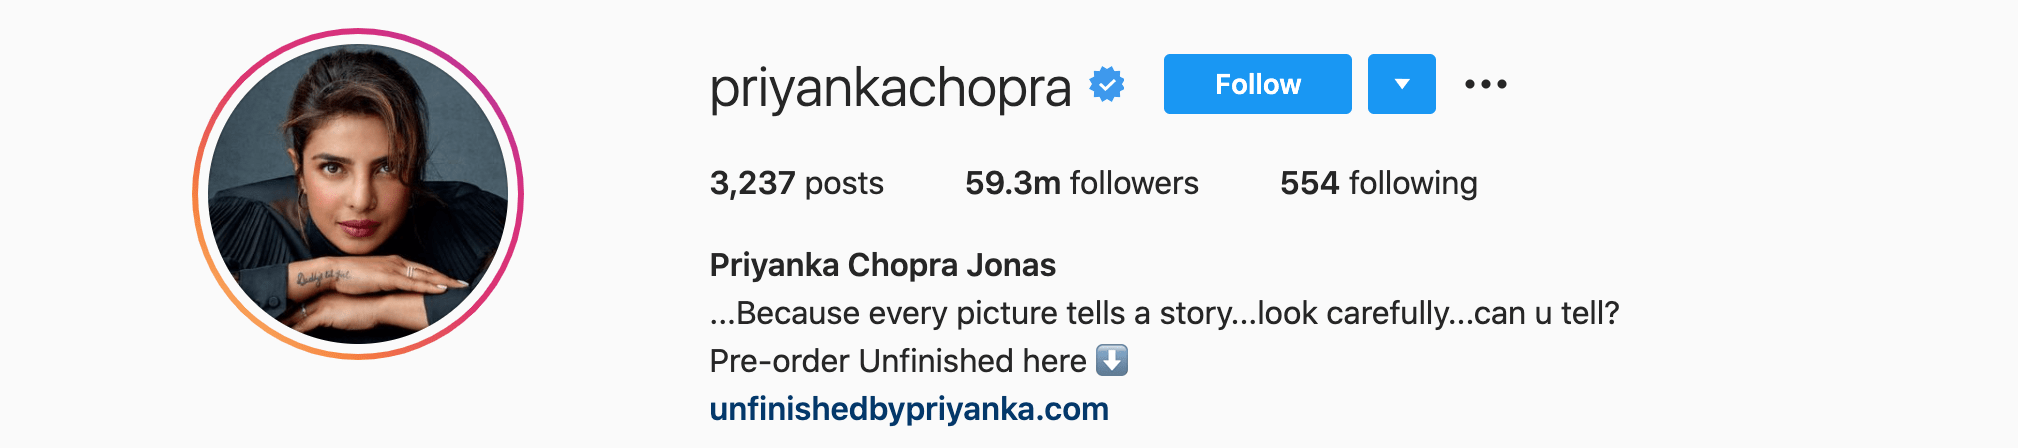 Top Instagram Influencers - PRIYANKA CHOPRA JONAS